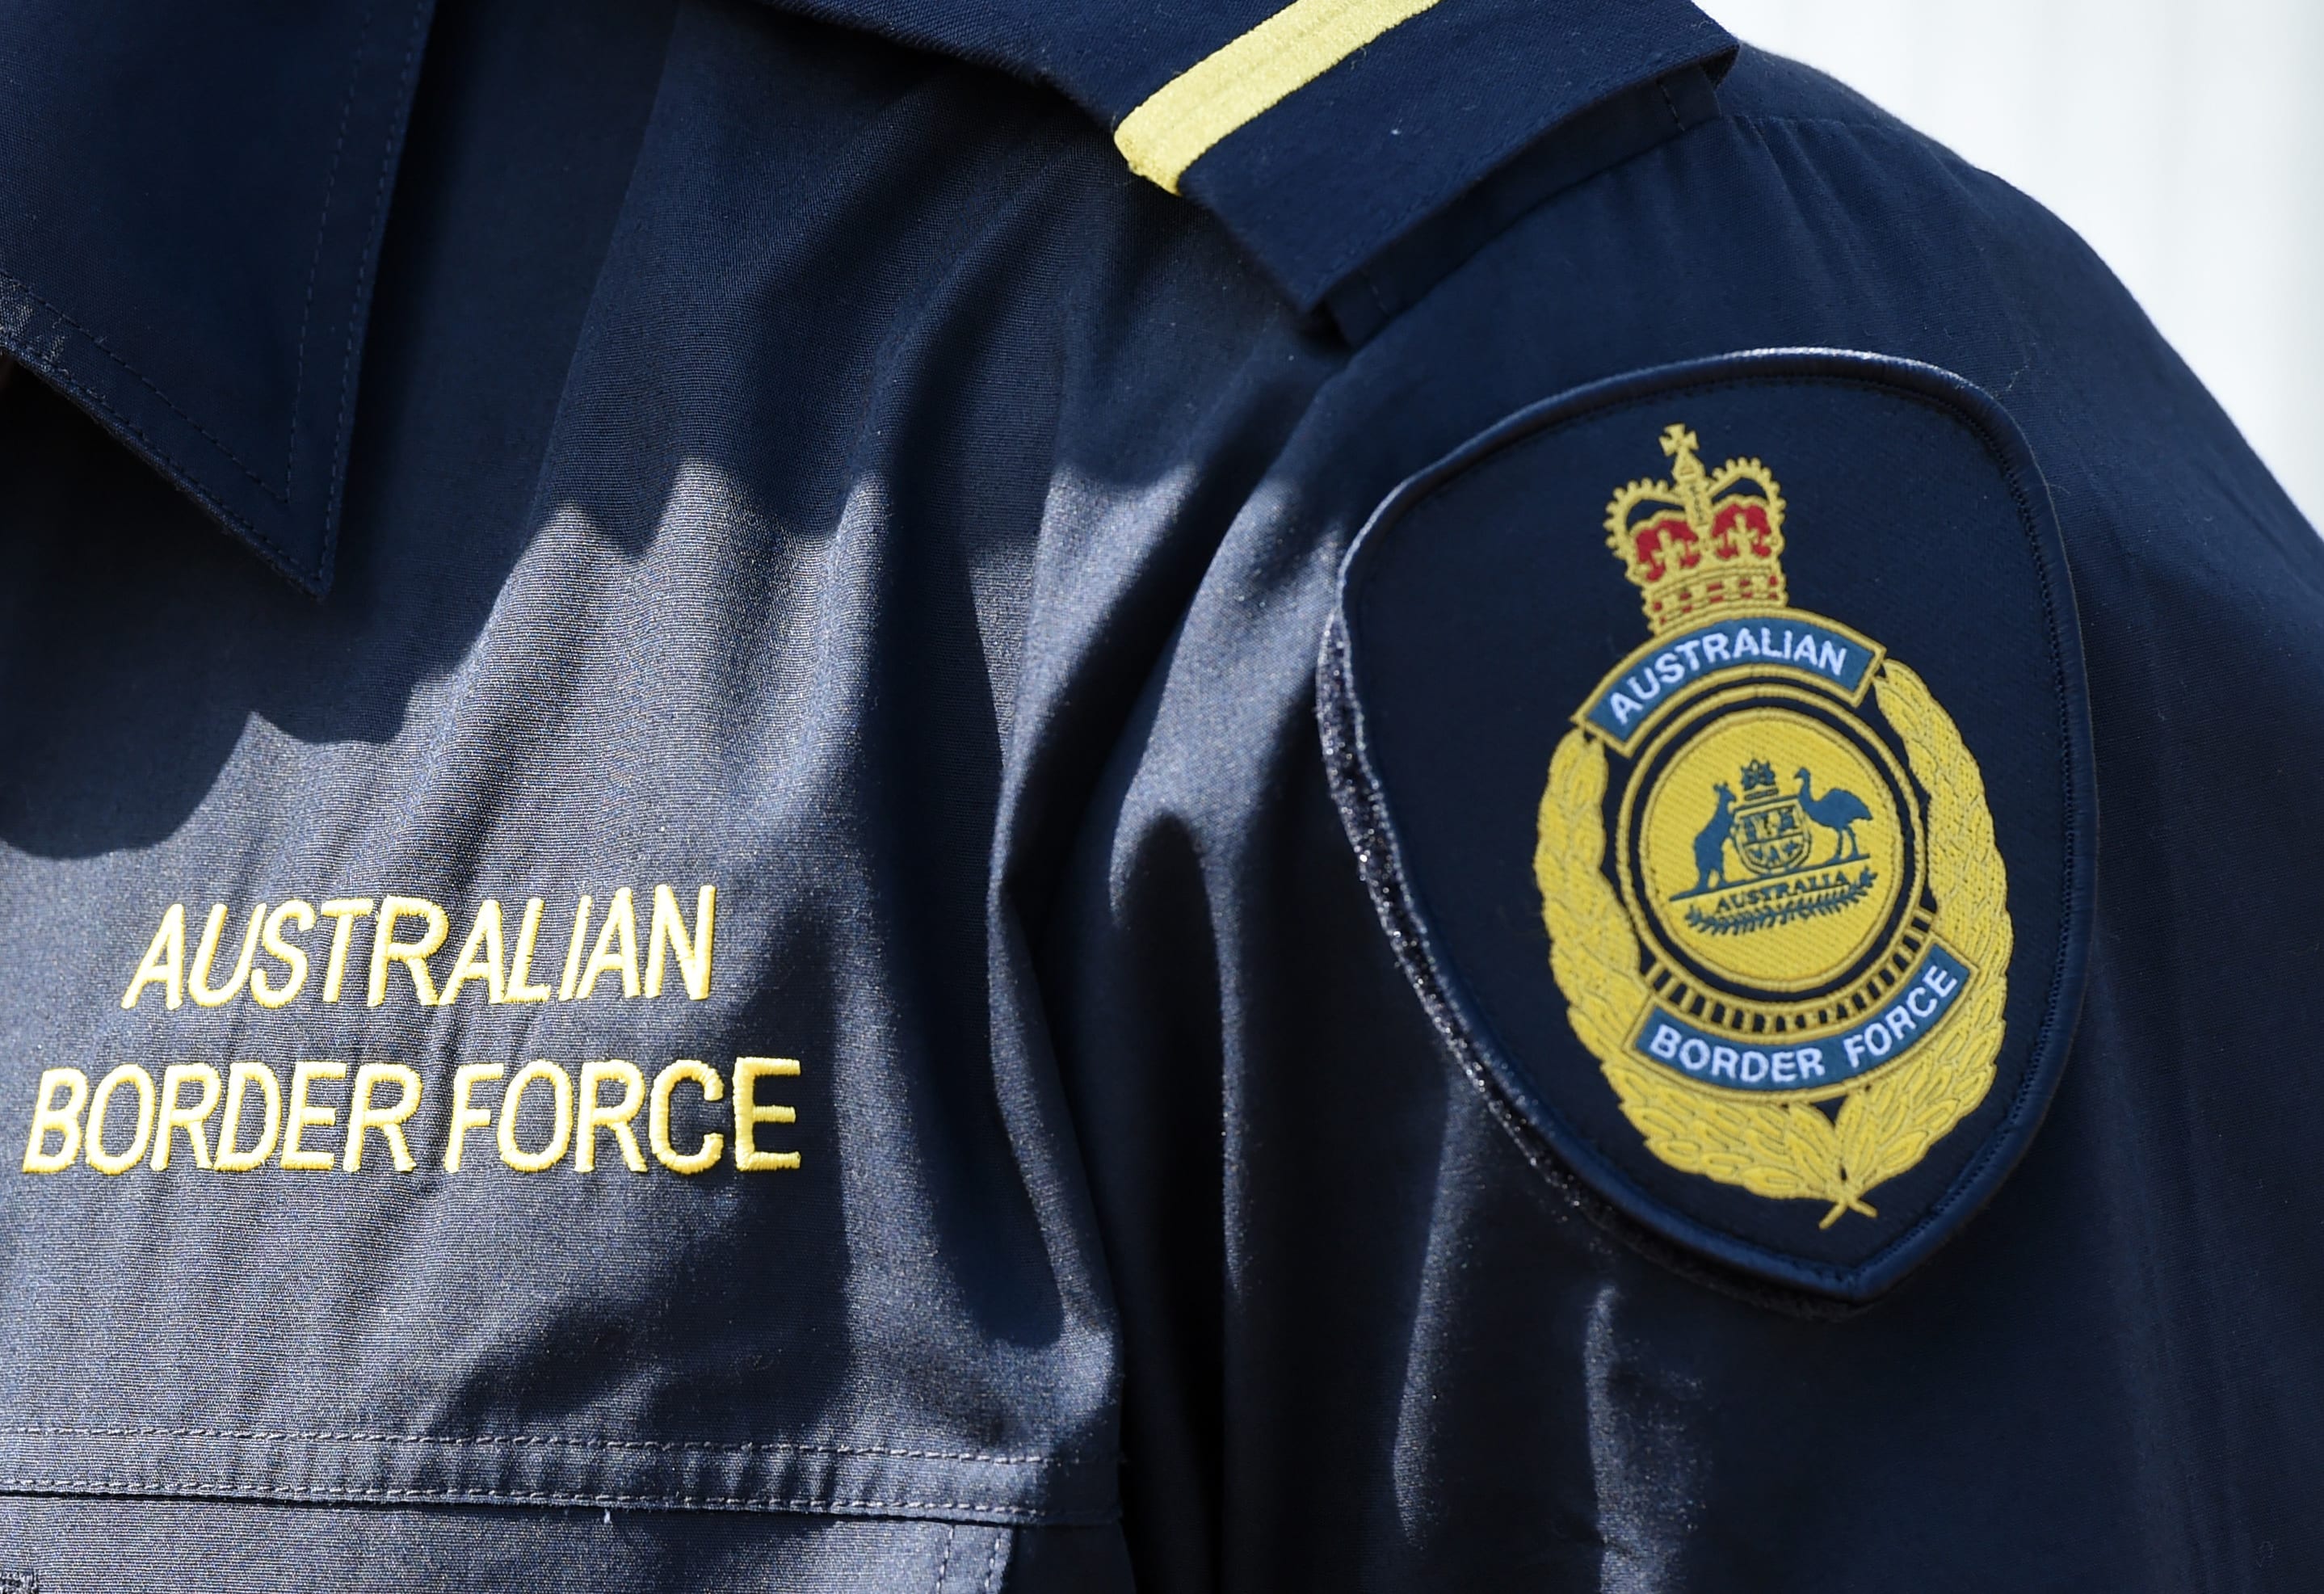 An Australian Border Force (ABF) badge can be seen on an officer's shirt.